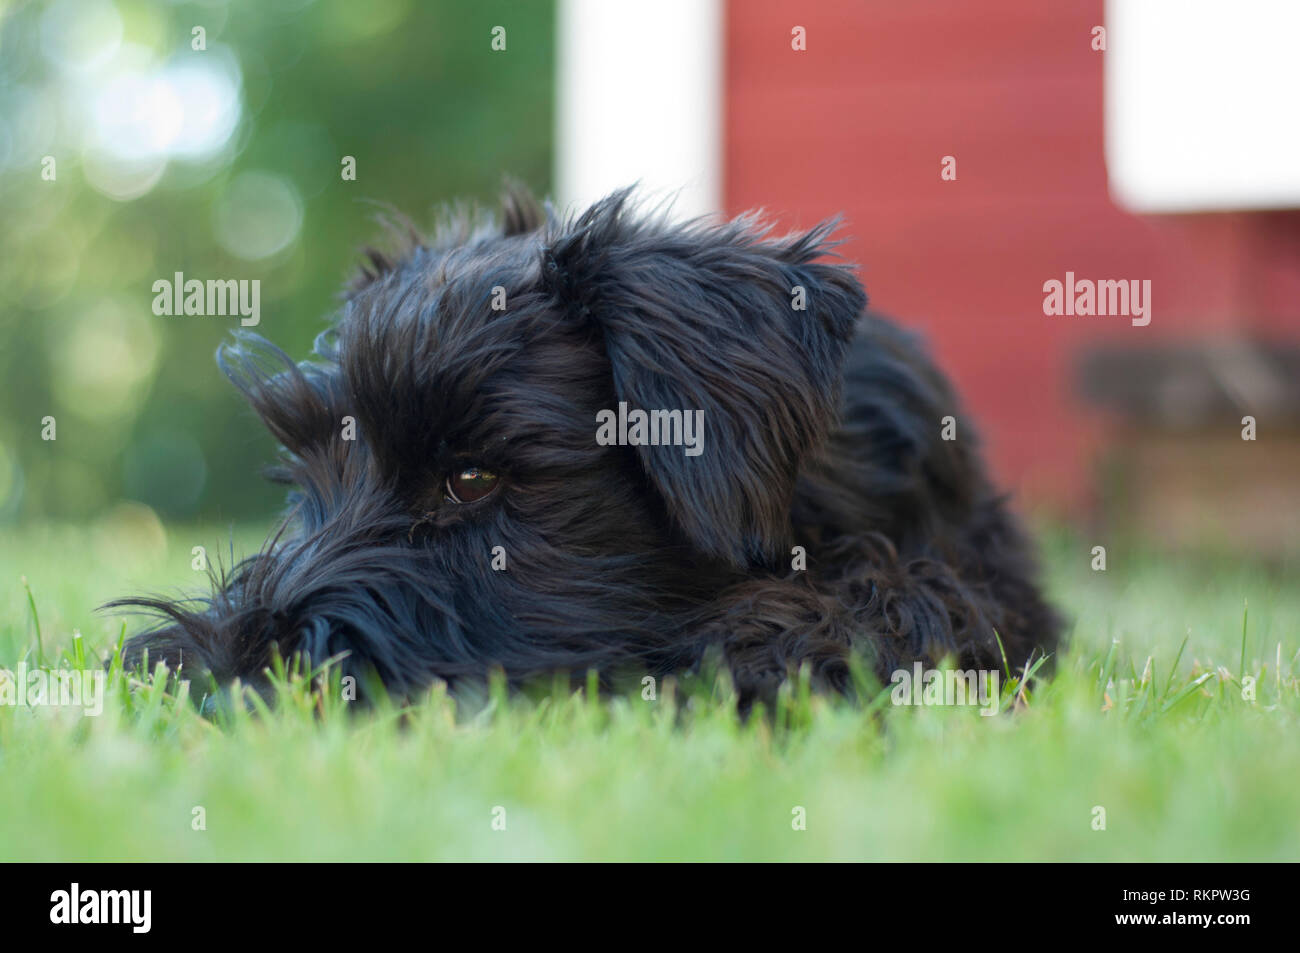 Black sleepy miniature schnauzer puppy glances sideways as it lays in grass in a garden. Stock Photo